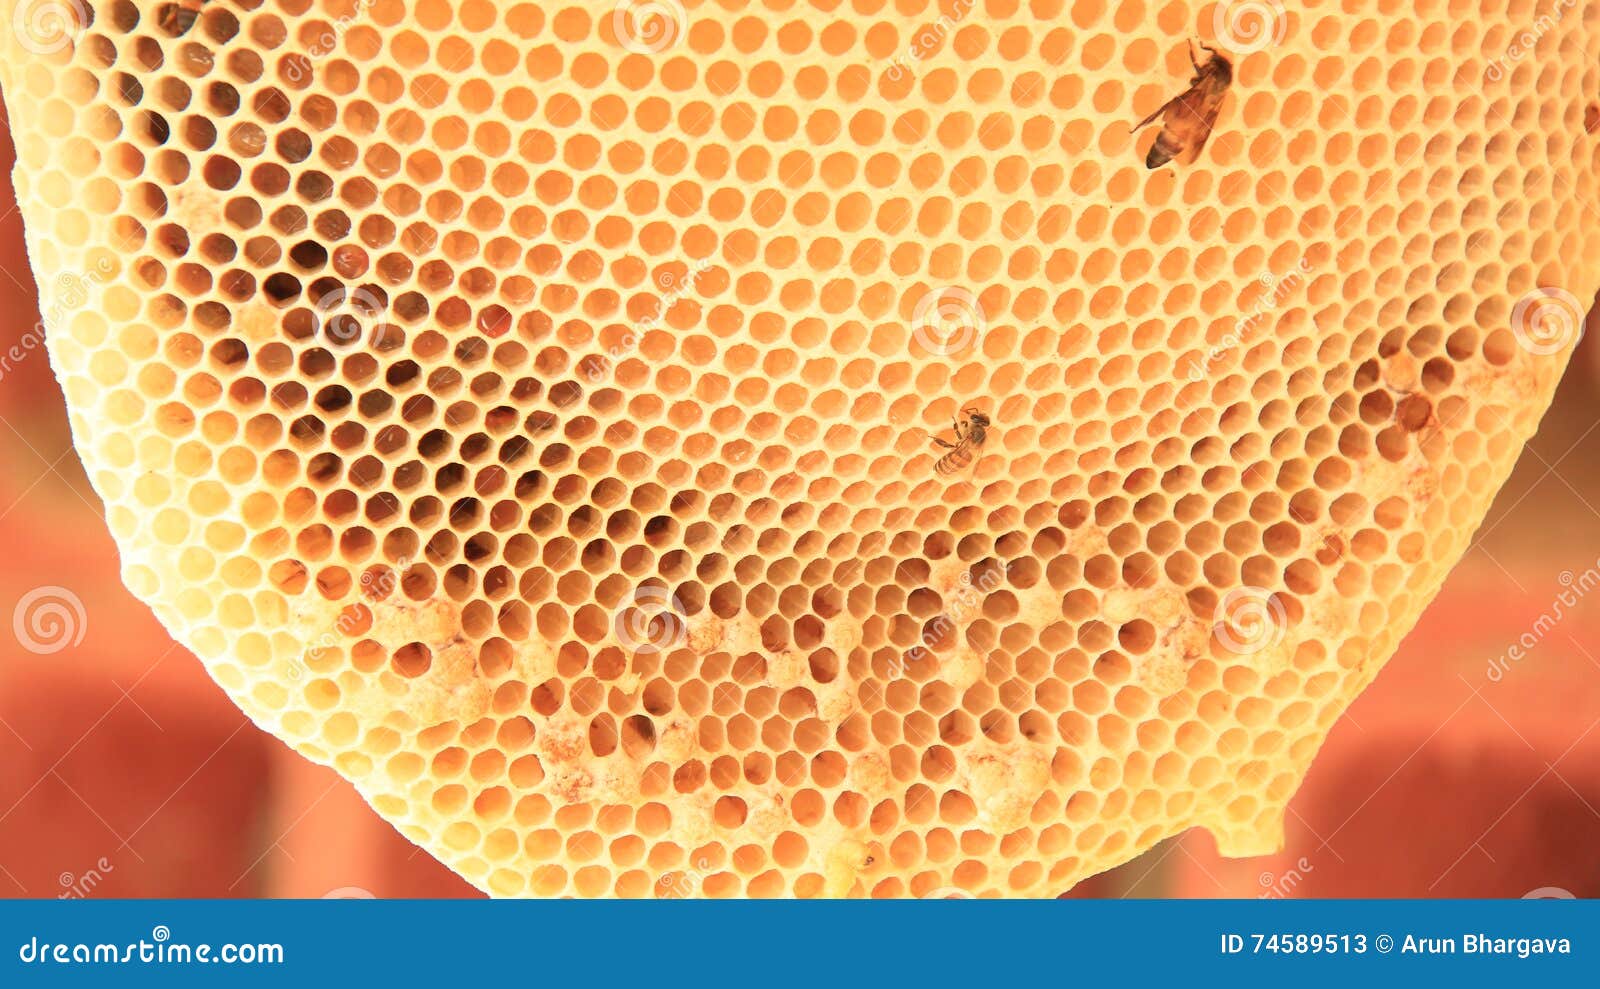 Natural Bee hive stock image. Image of honeycomb, close ...